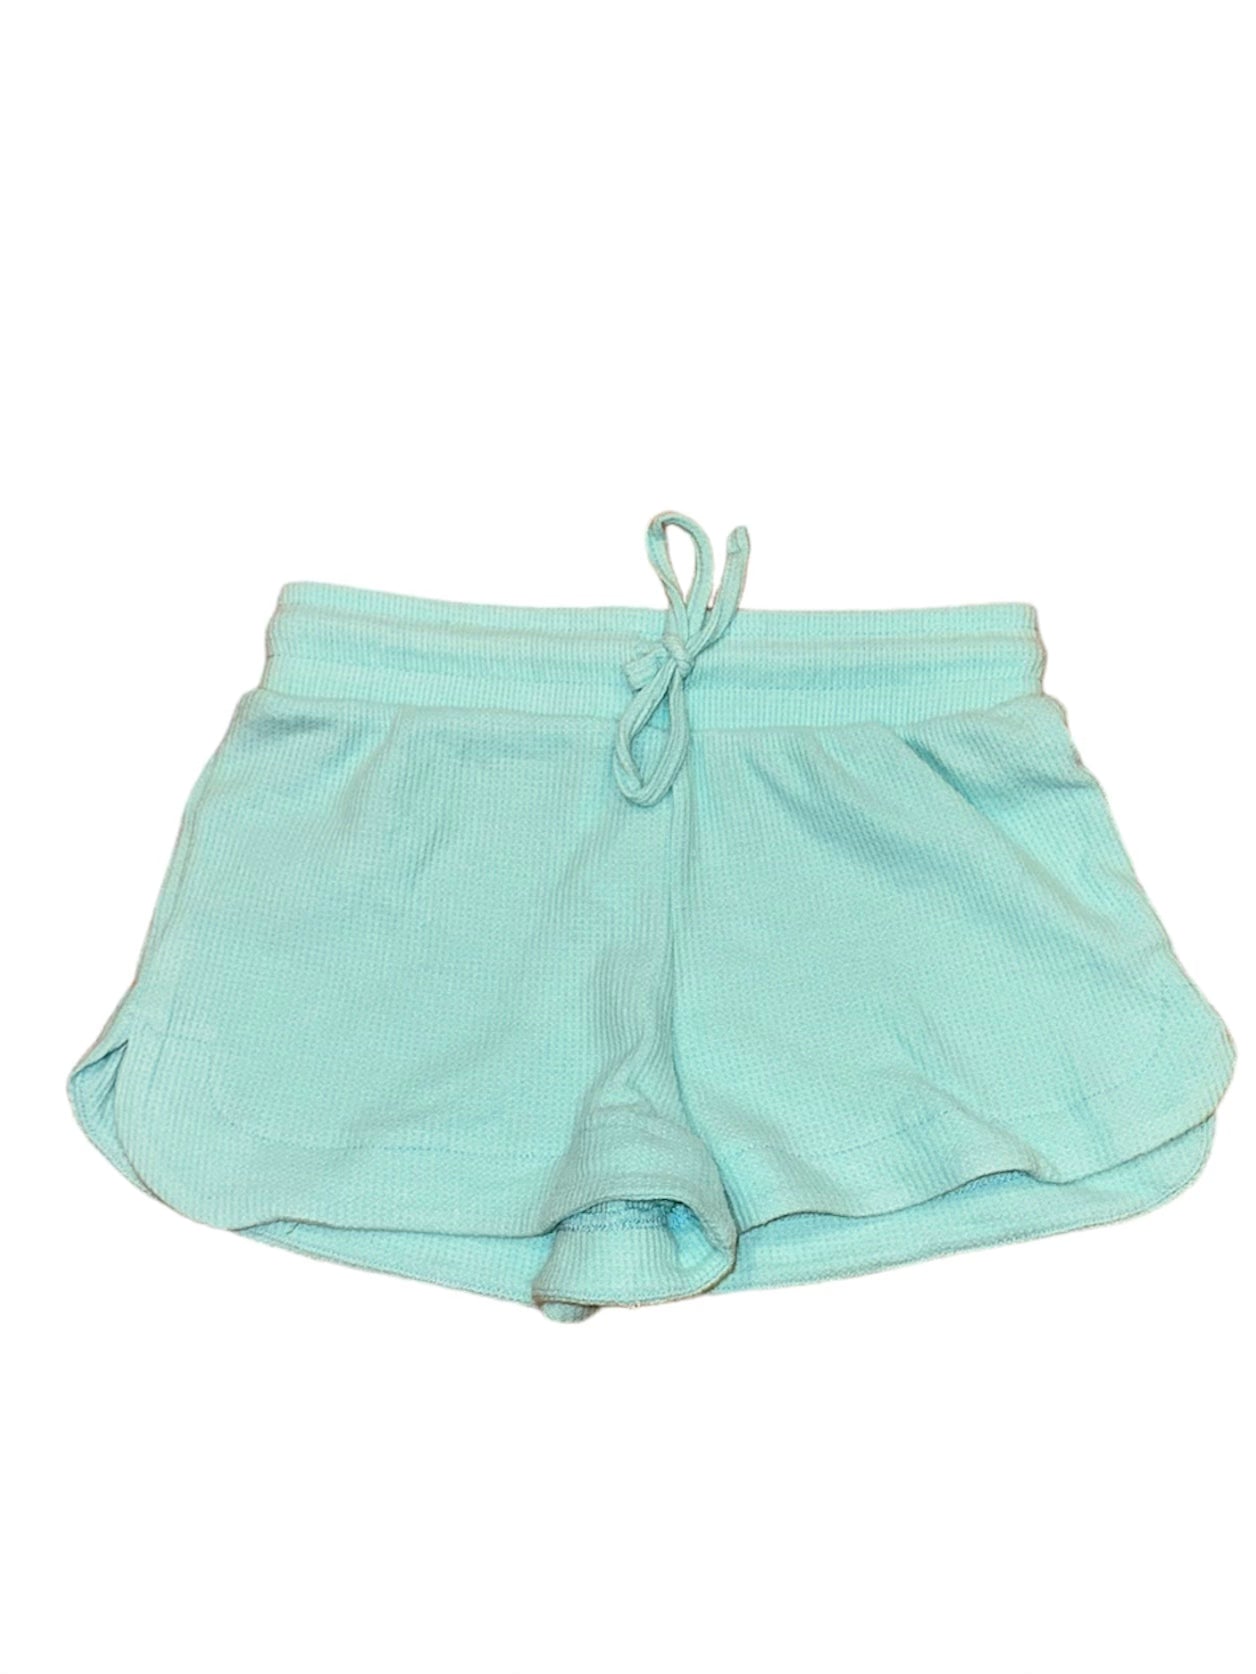 Suzette Aqua Girls Shorts